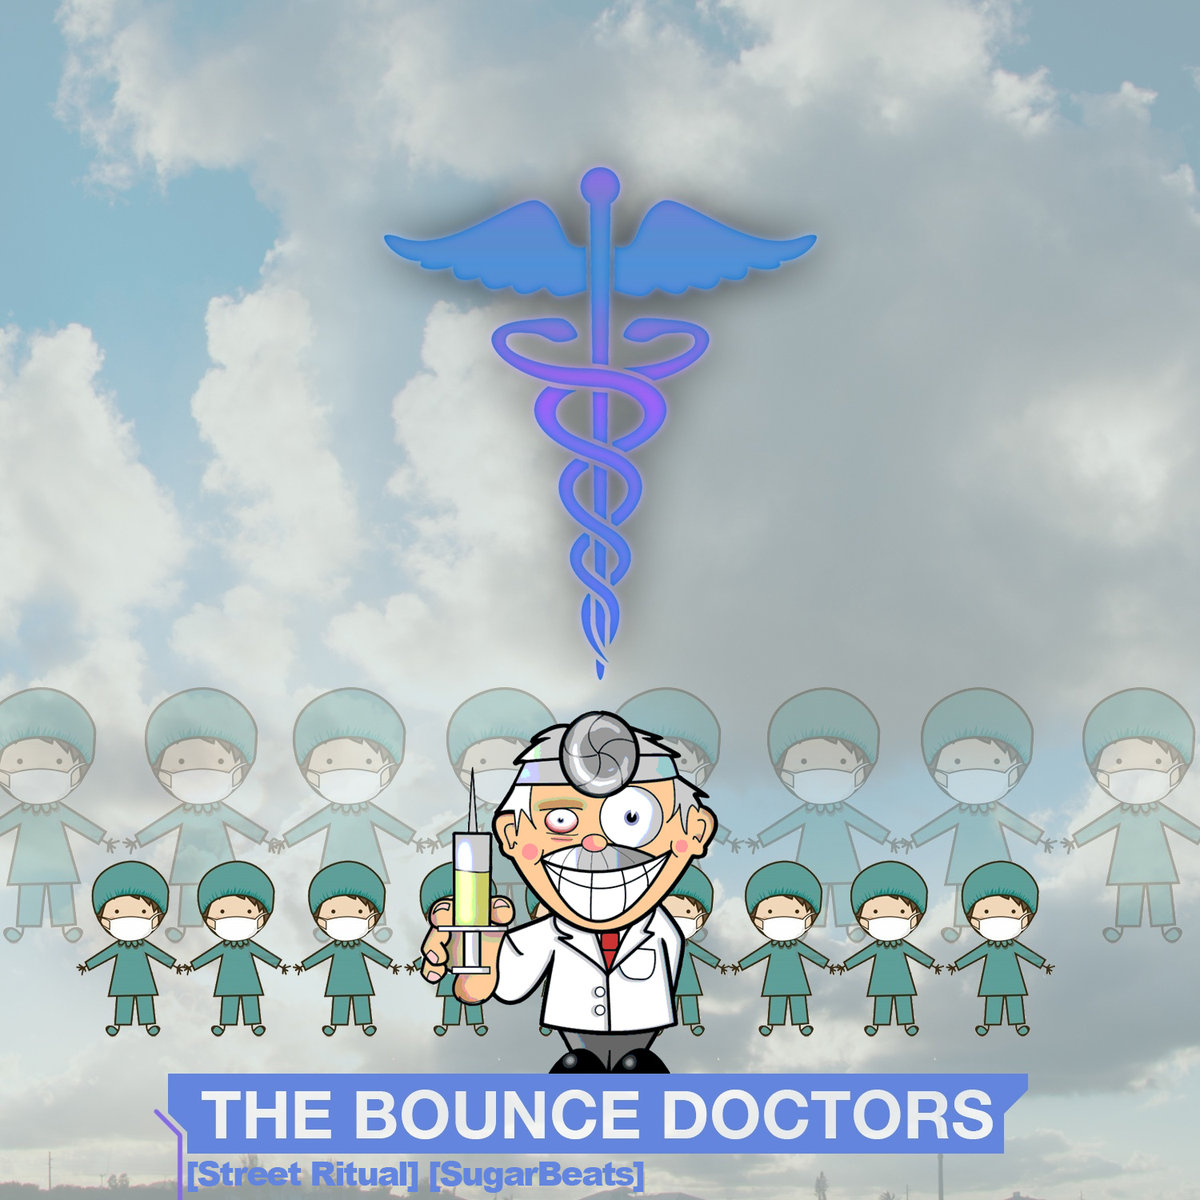 kLL sMTH - Twerkinstocks @ 'The Bounce Doctors' album (bass, chillstep)